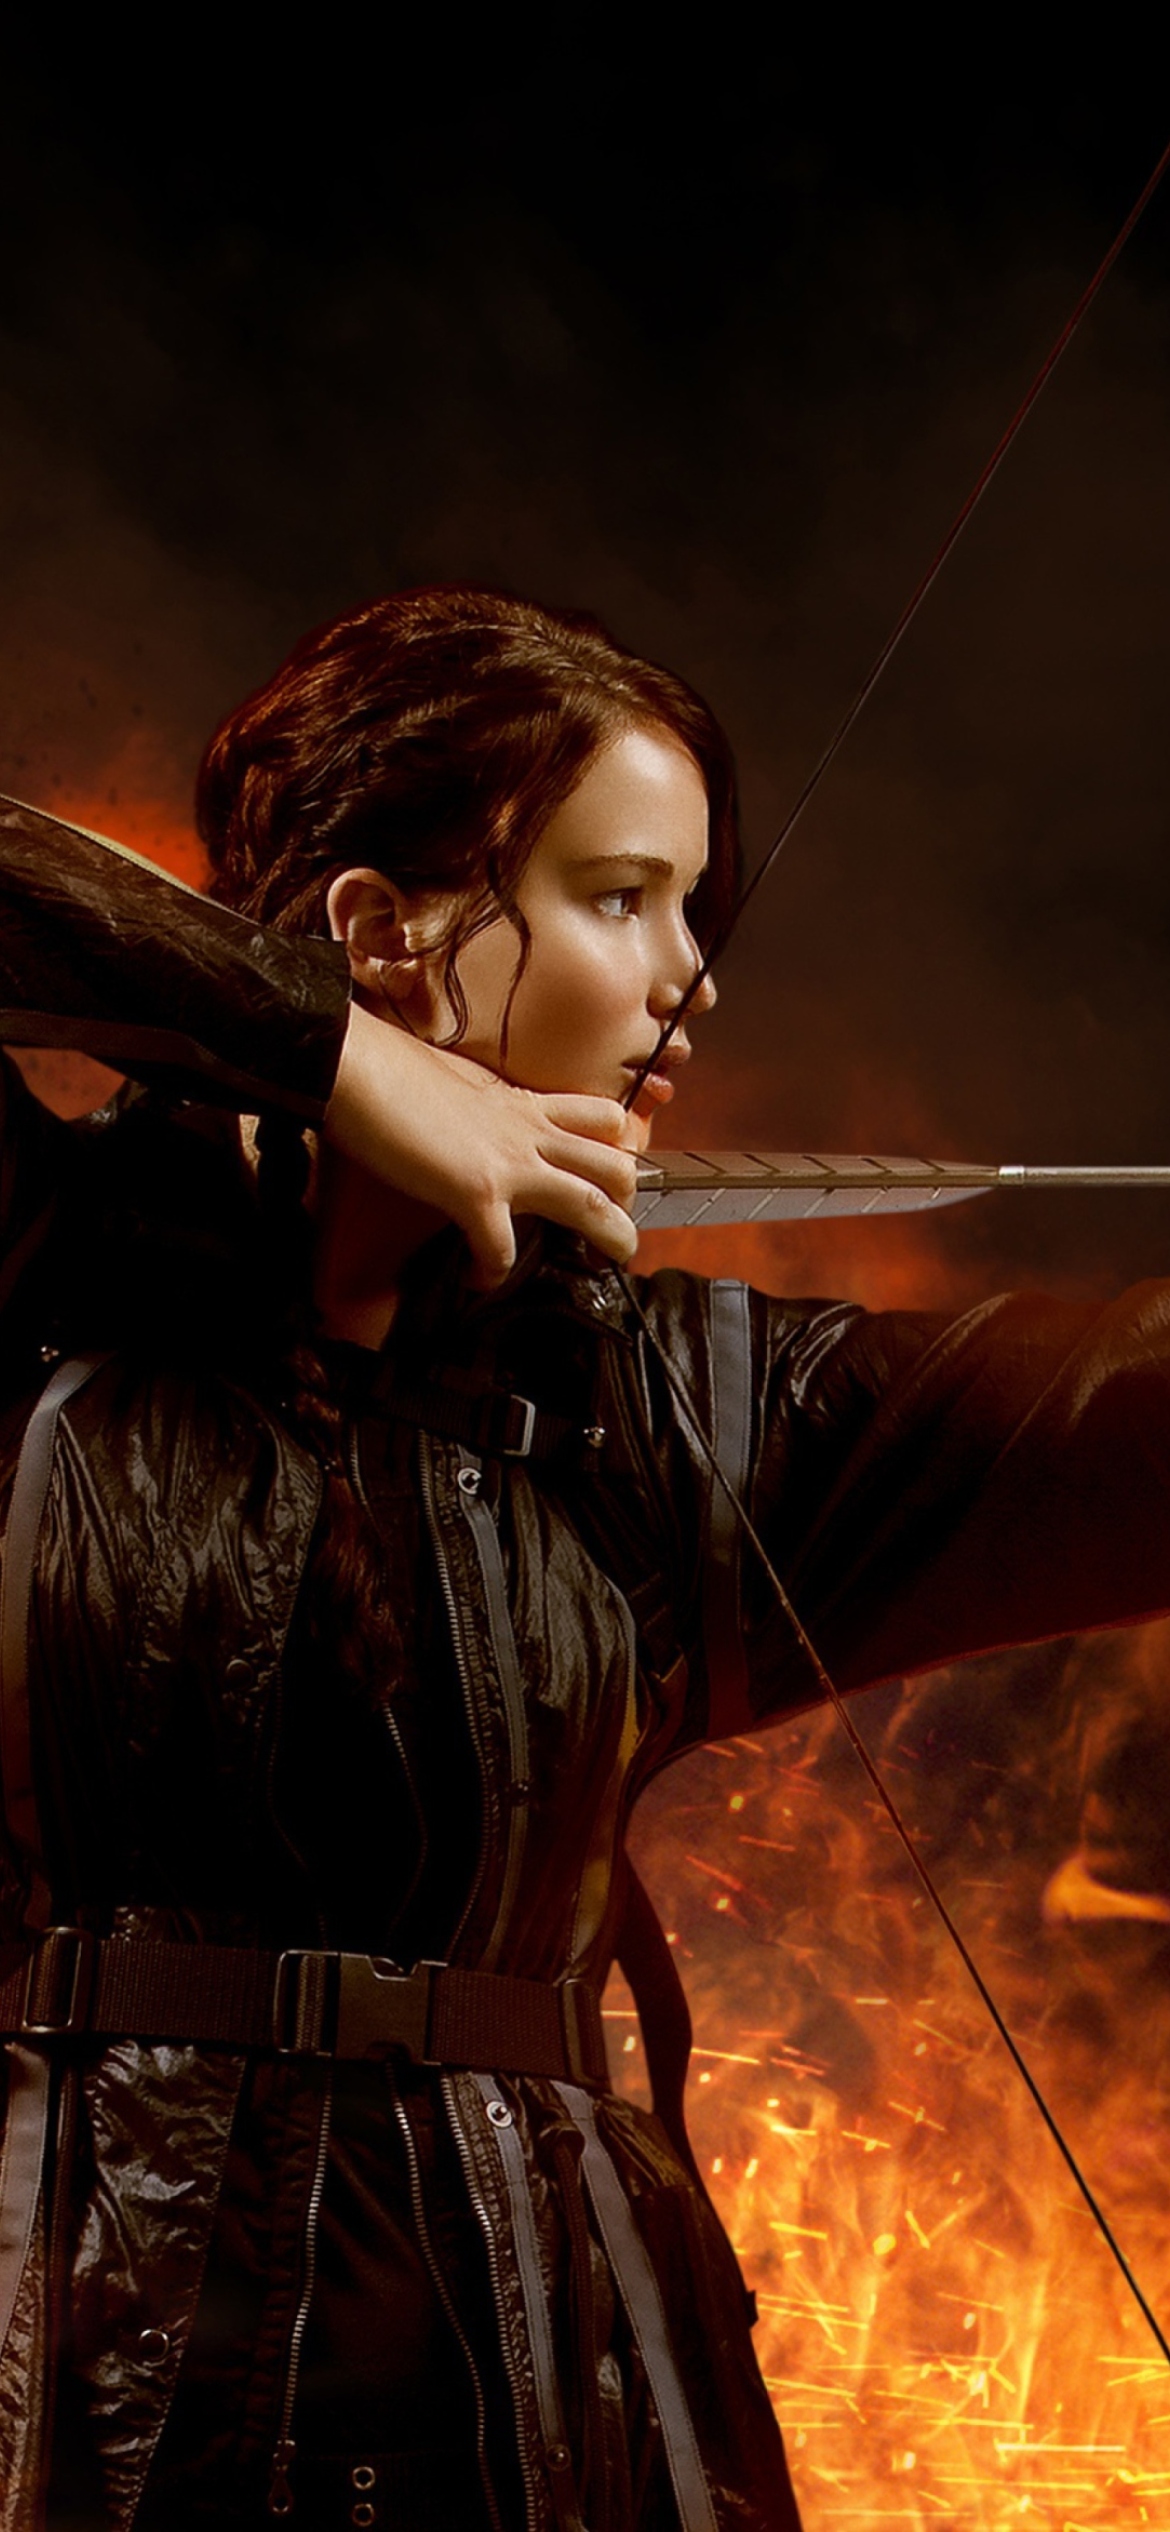 Jennifer Lawrence In Hunger Games wallpaper 1170x2532